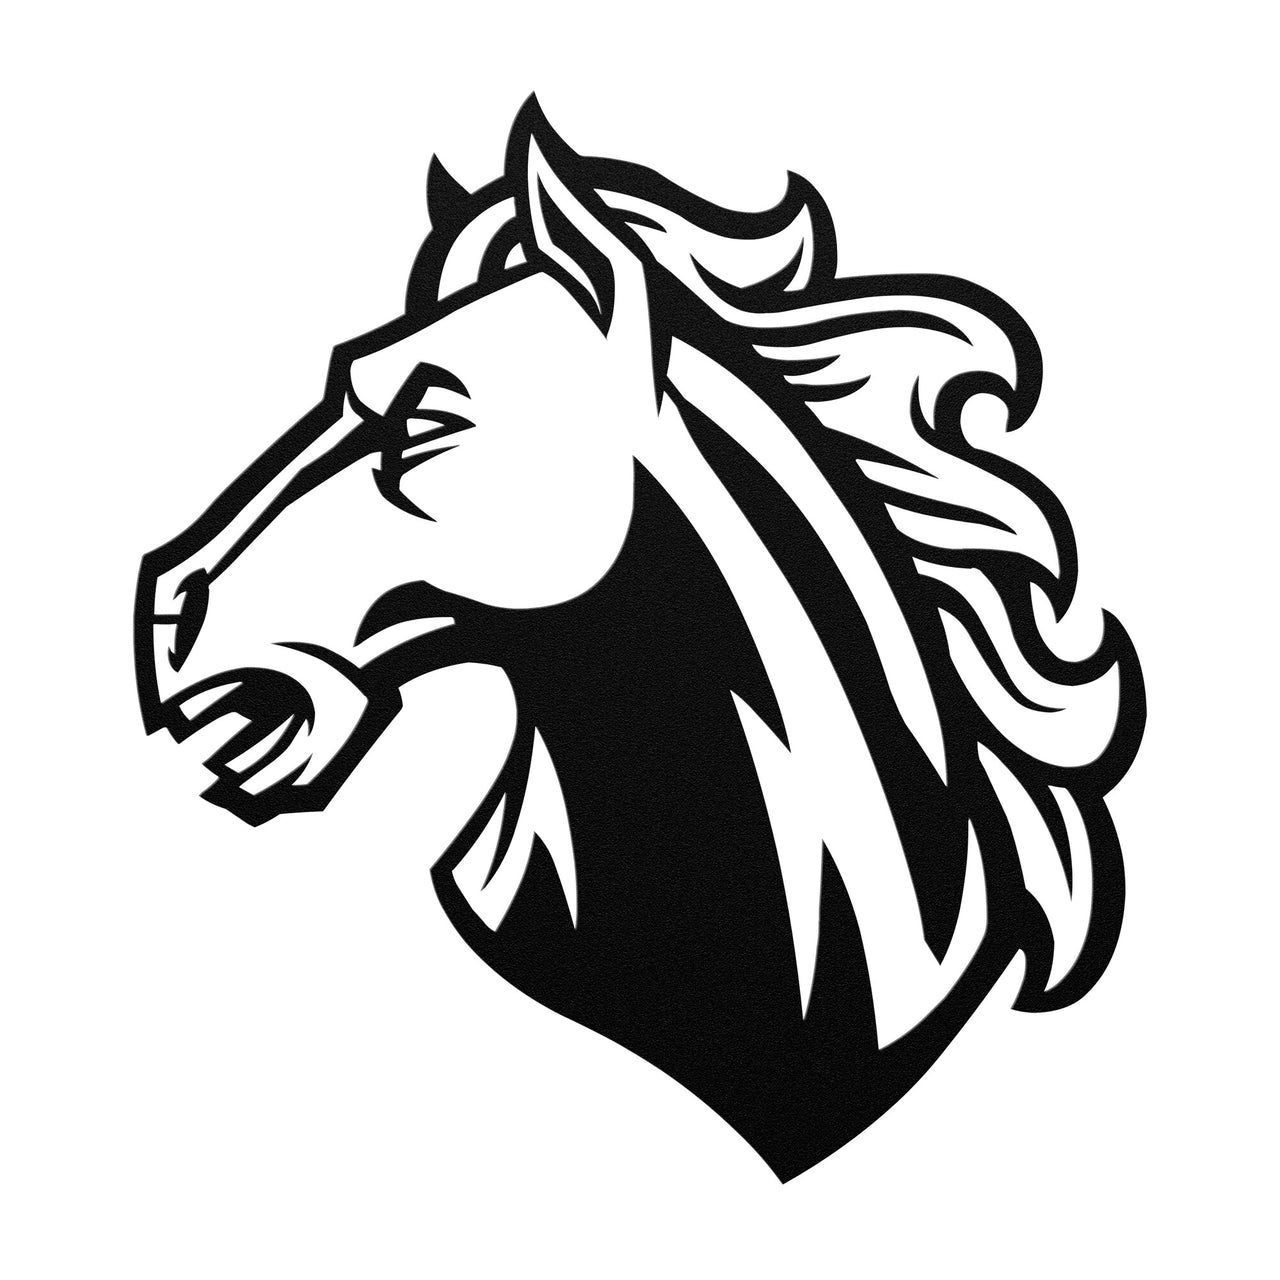 Bronco, Mustang, Stallion, Horse head graphic